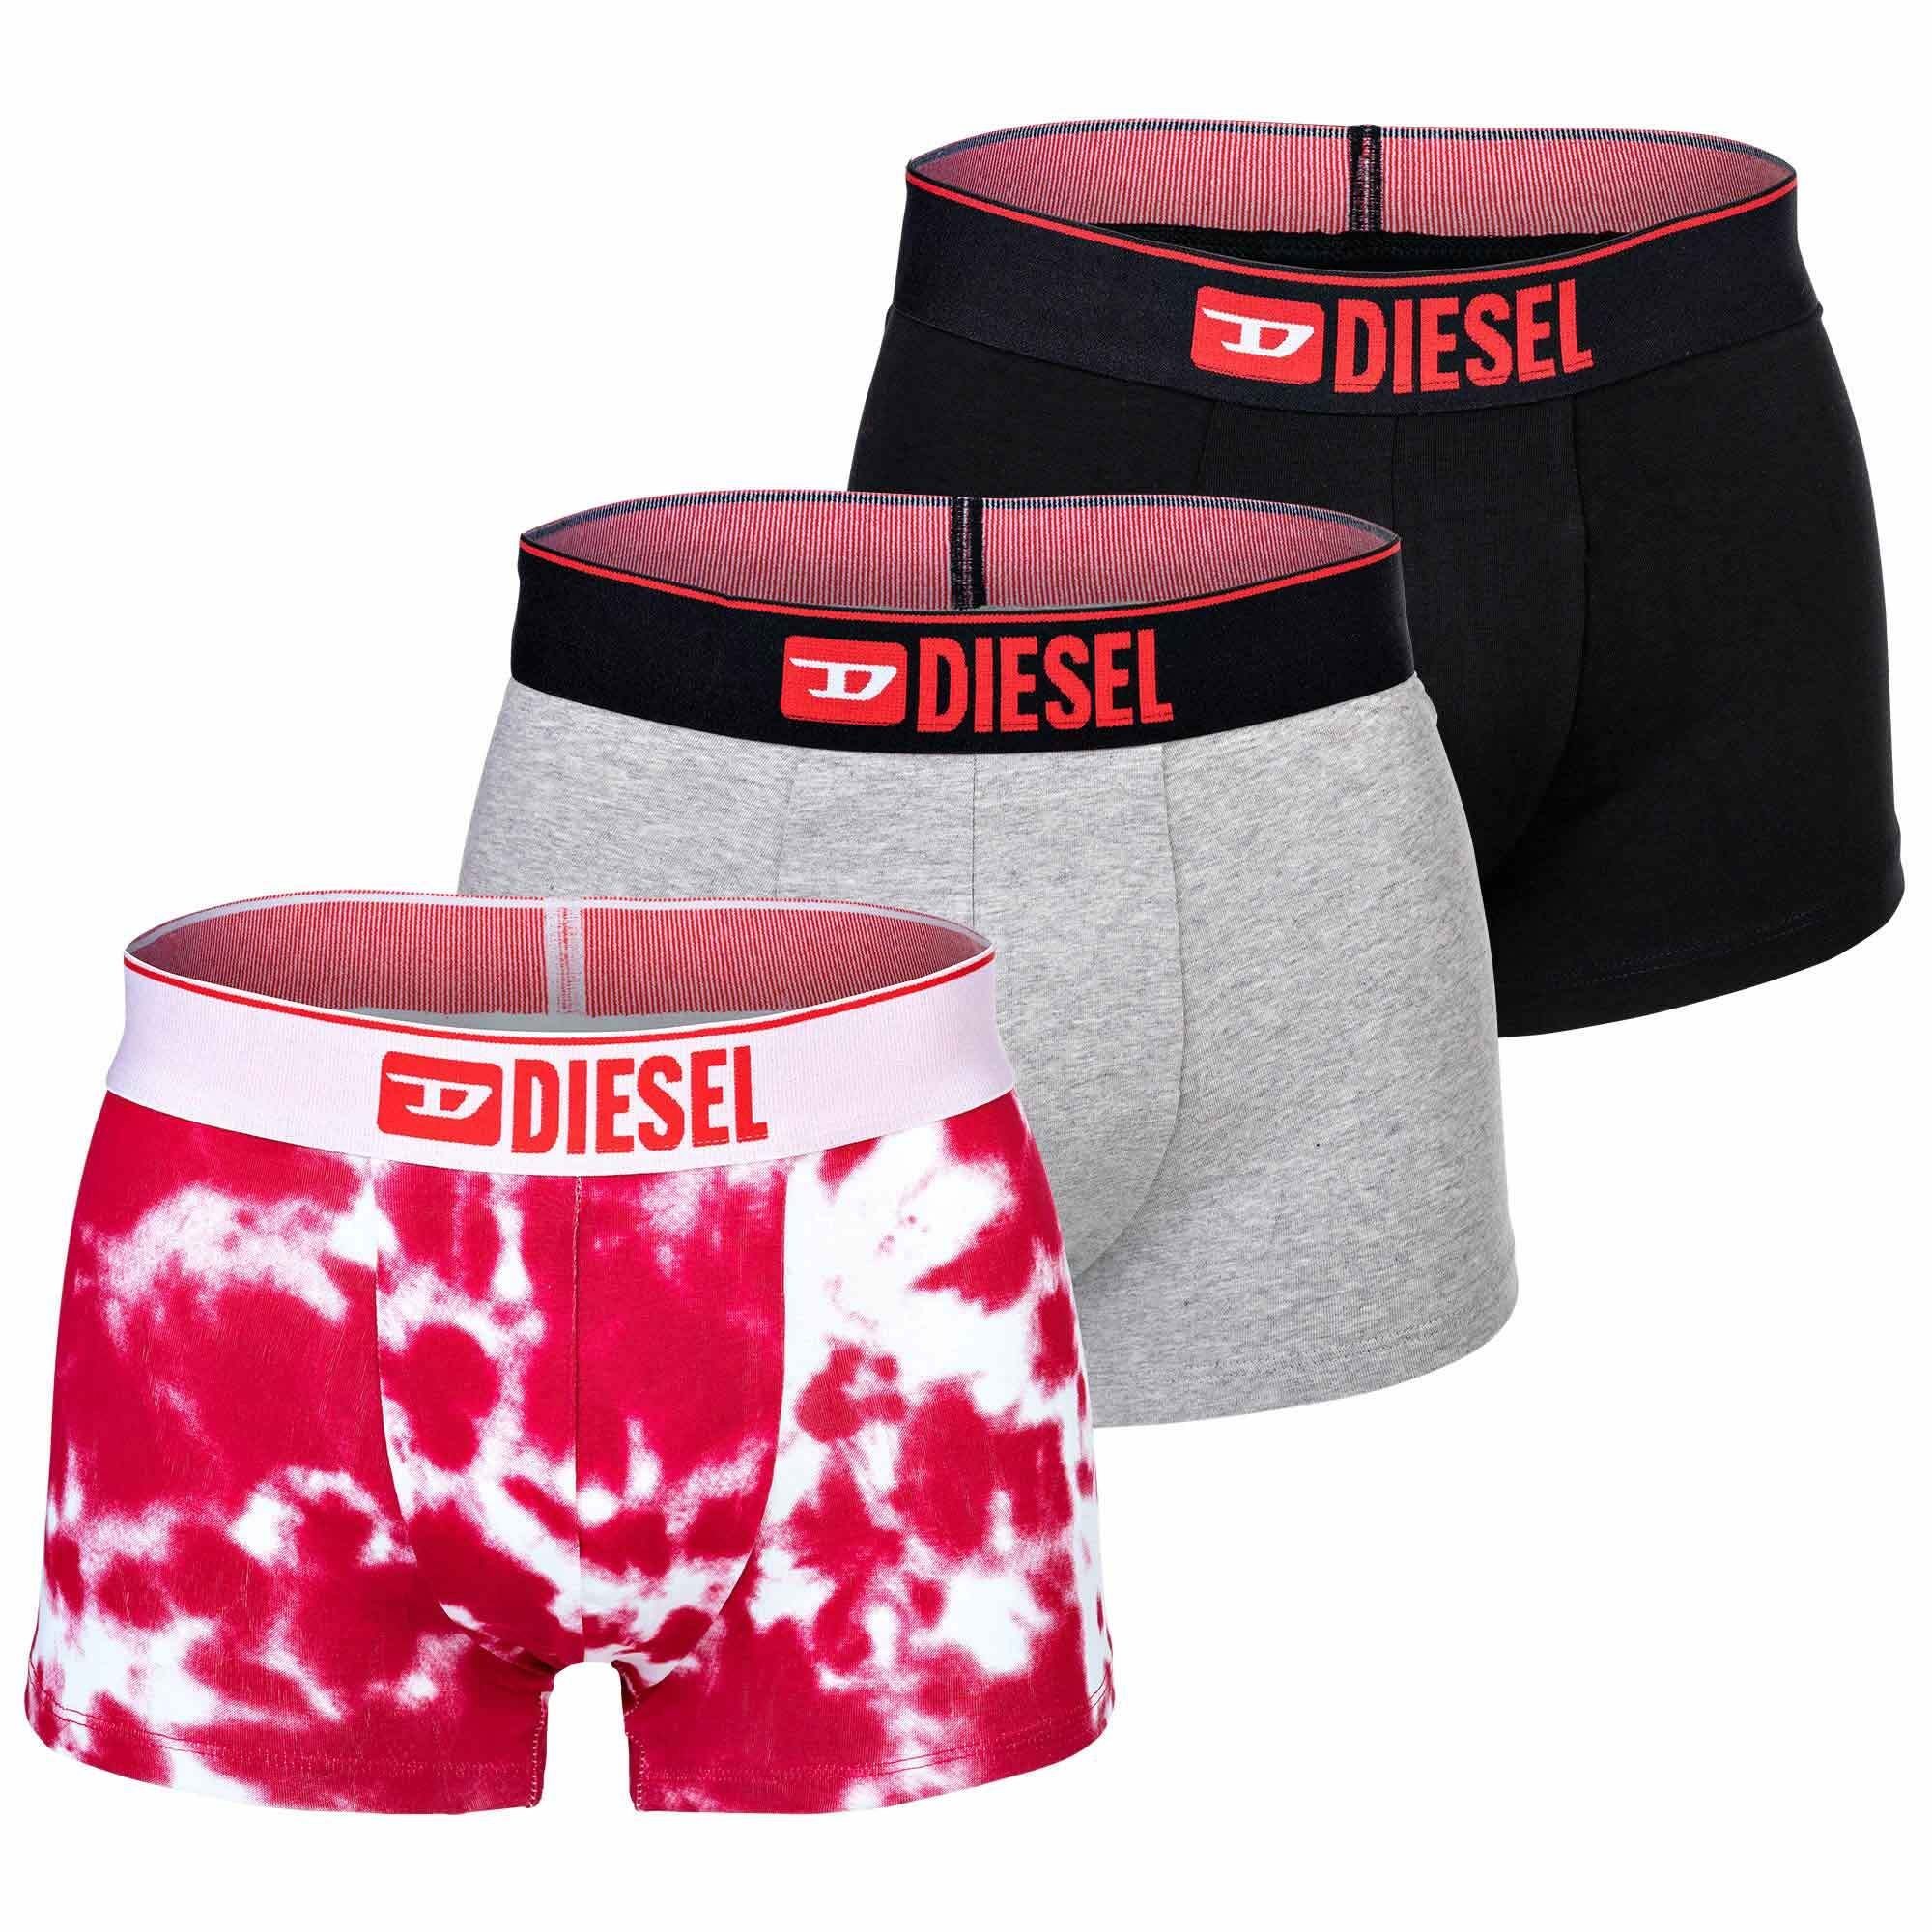 Diesel Boxer Herren Boxershorts, 3er Pack - Schwarz/Grau/Rot